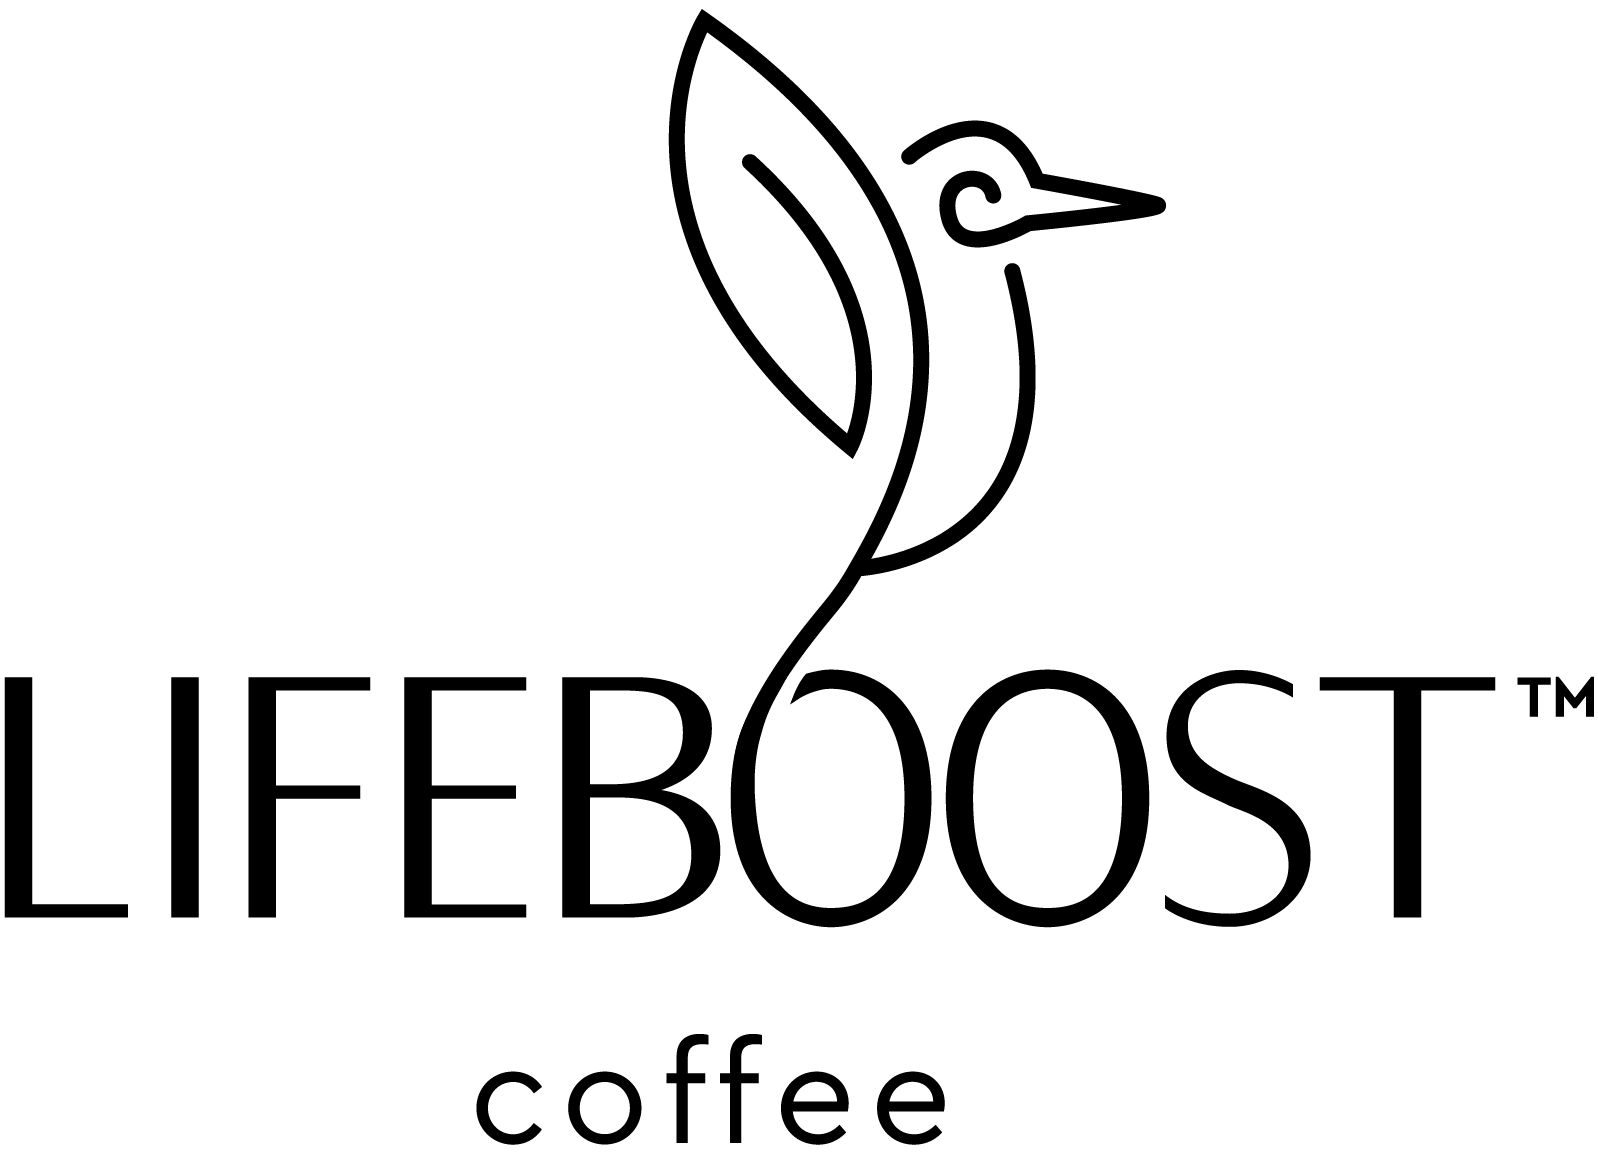 01-LifeboostCoffee-Branding-Logo-RGB-MainLogo-Main (1).png